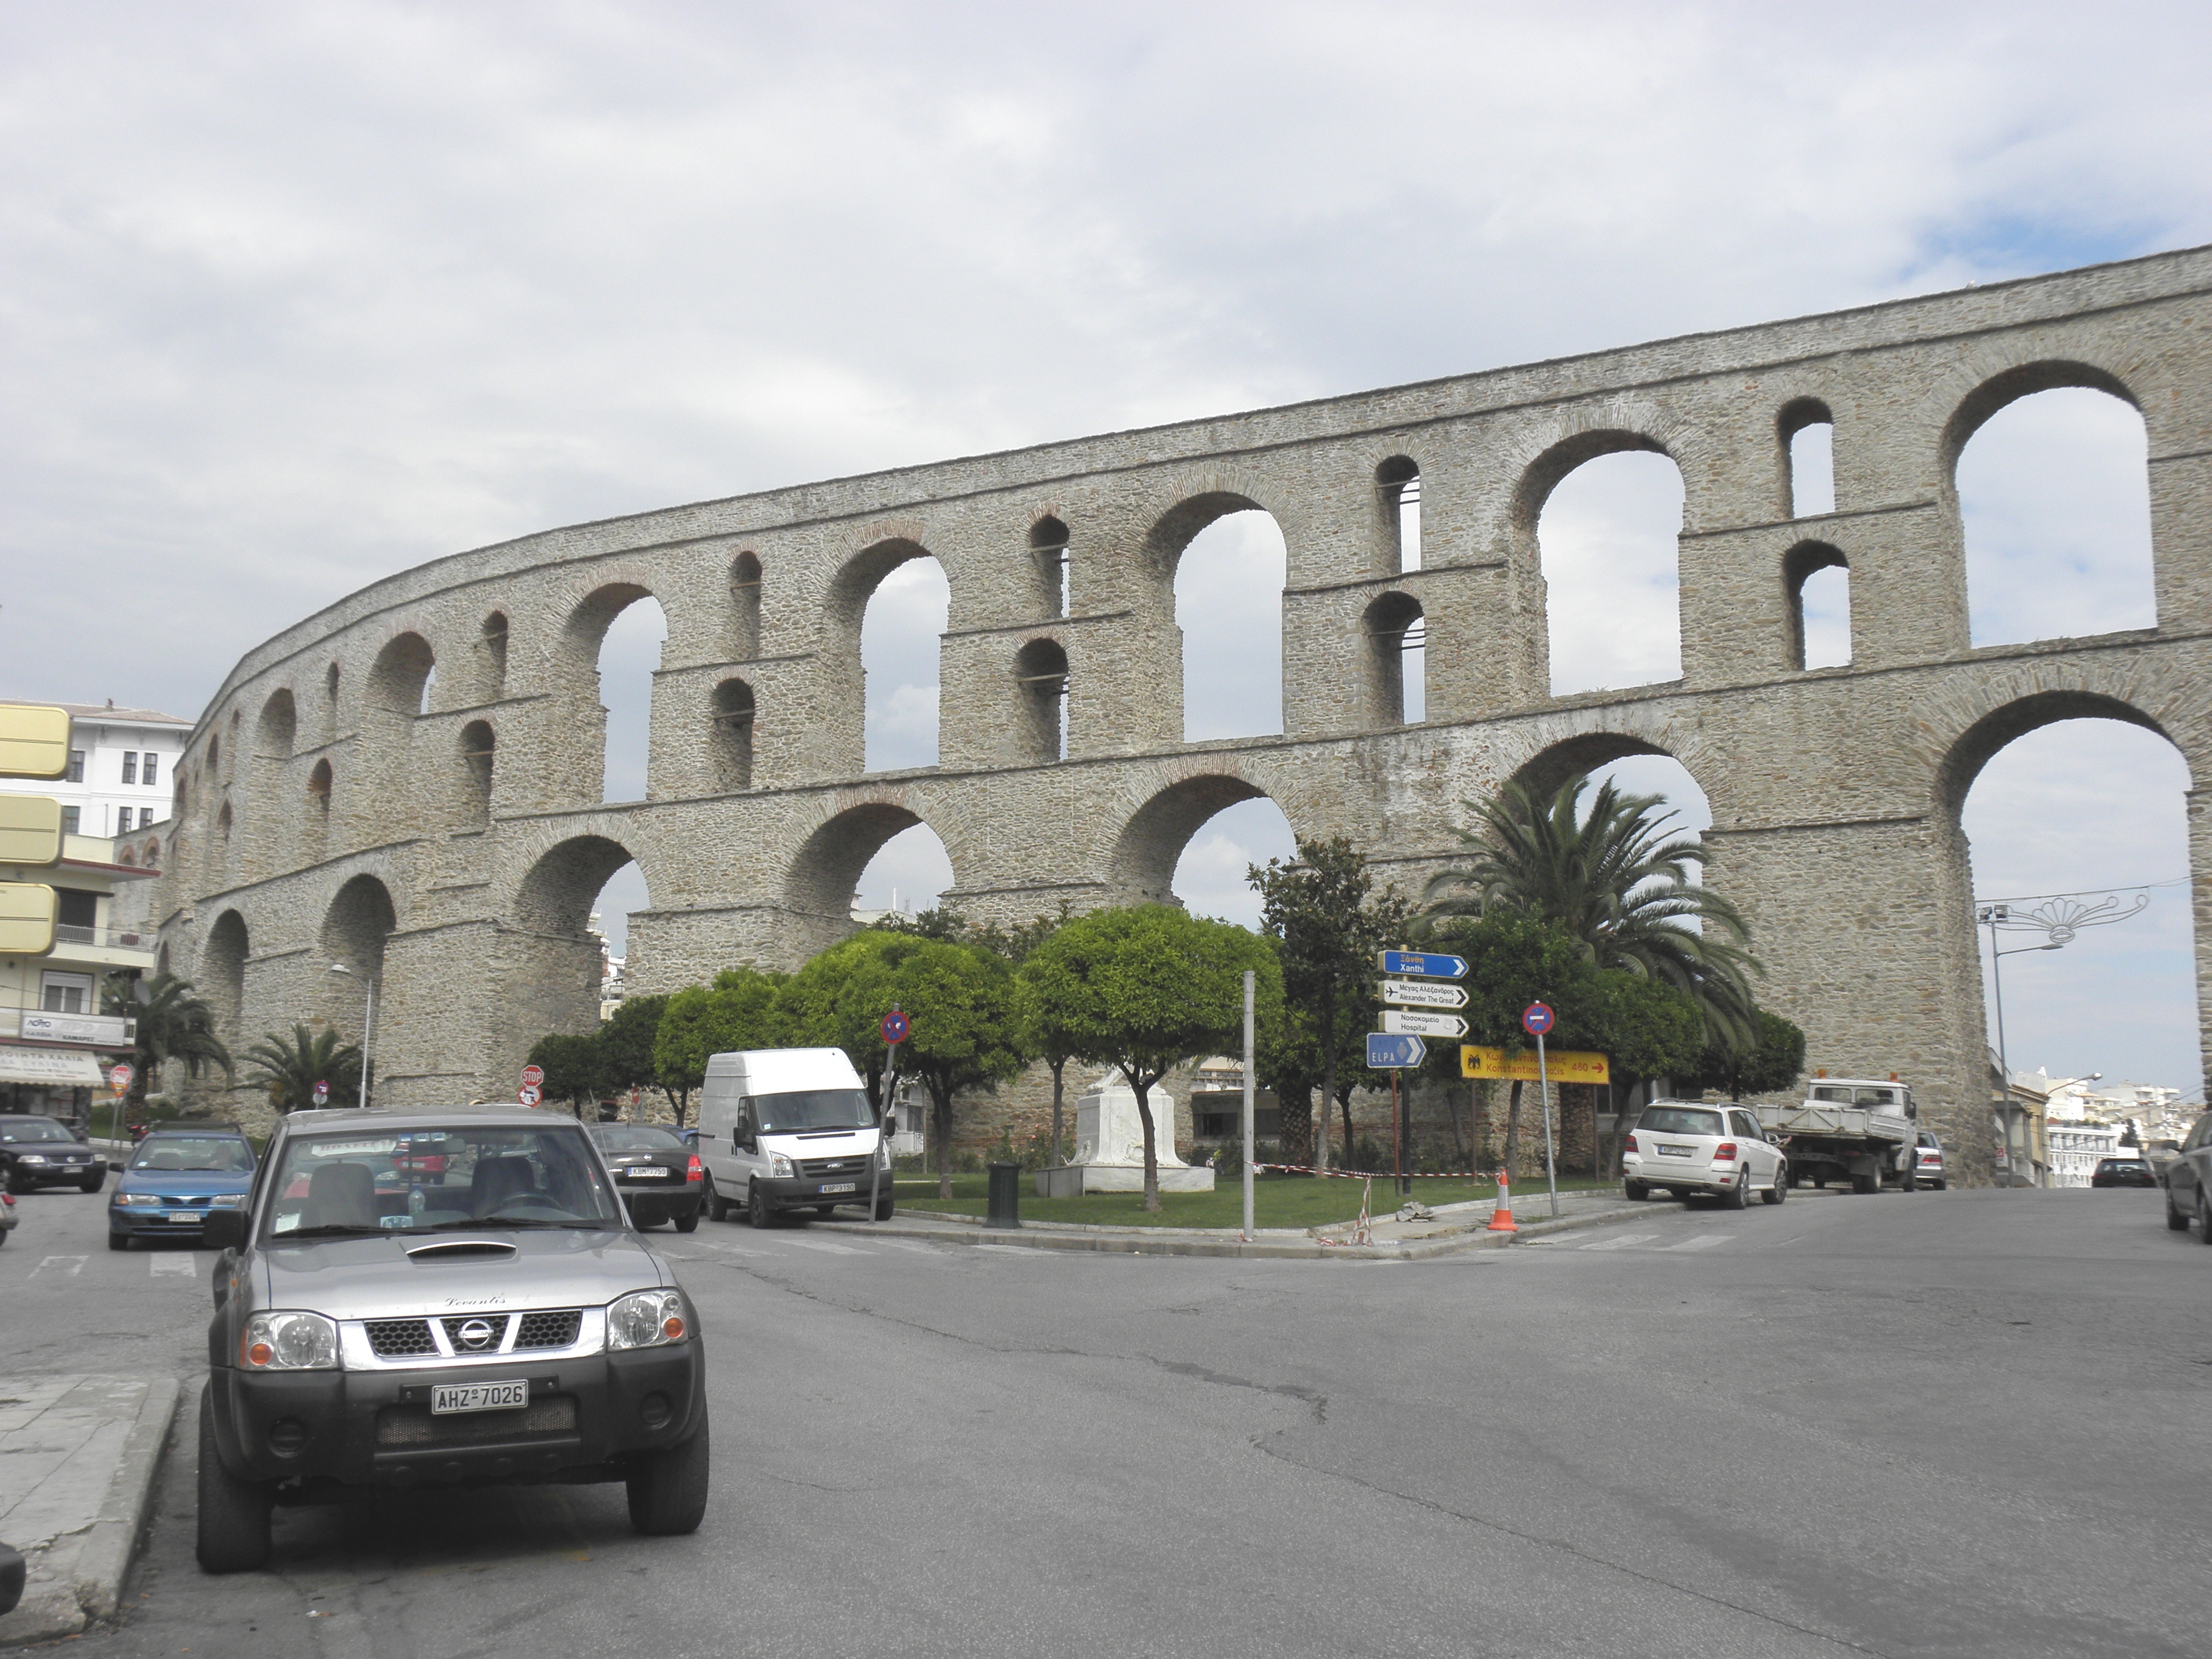 Aqueduct in kavala, greece photo